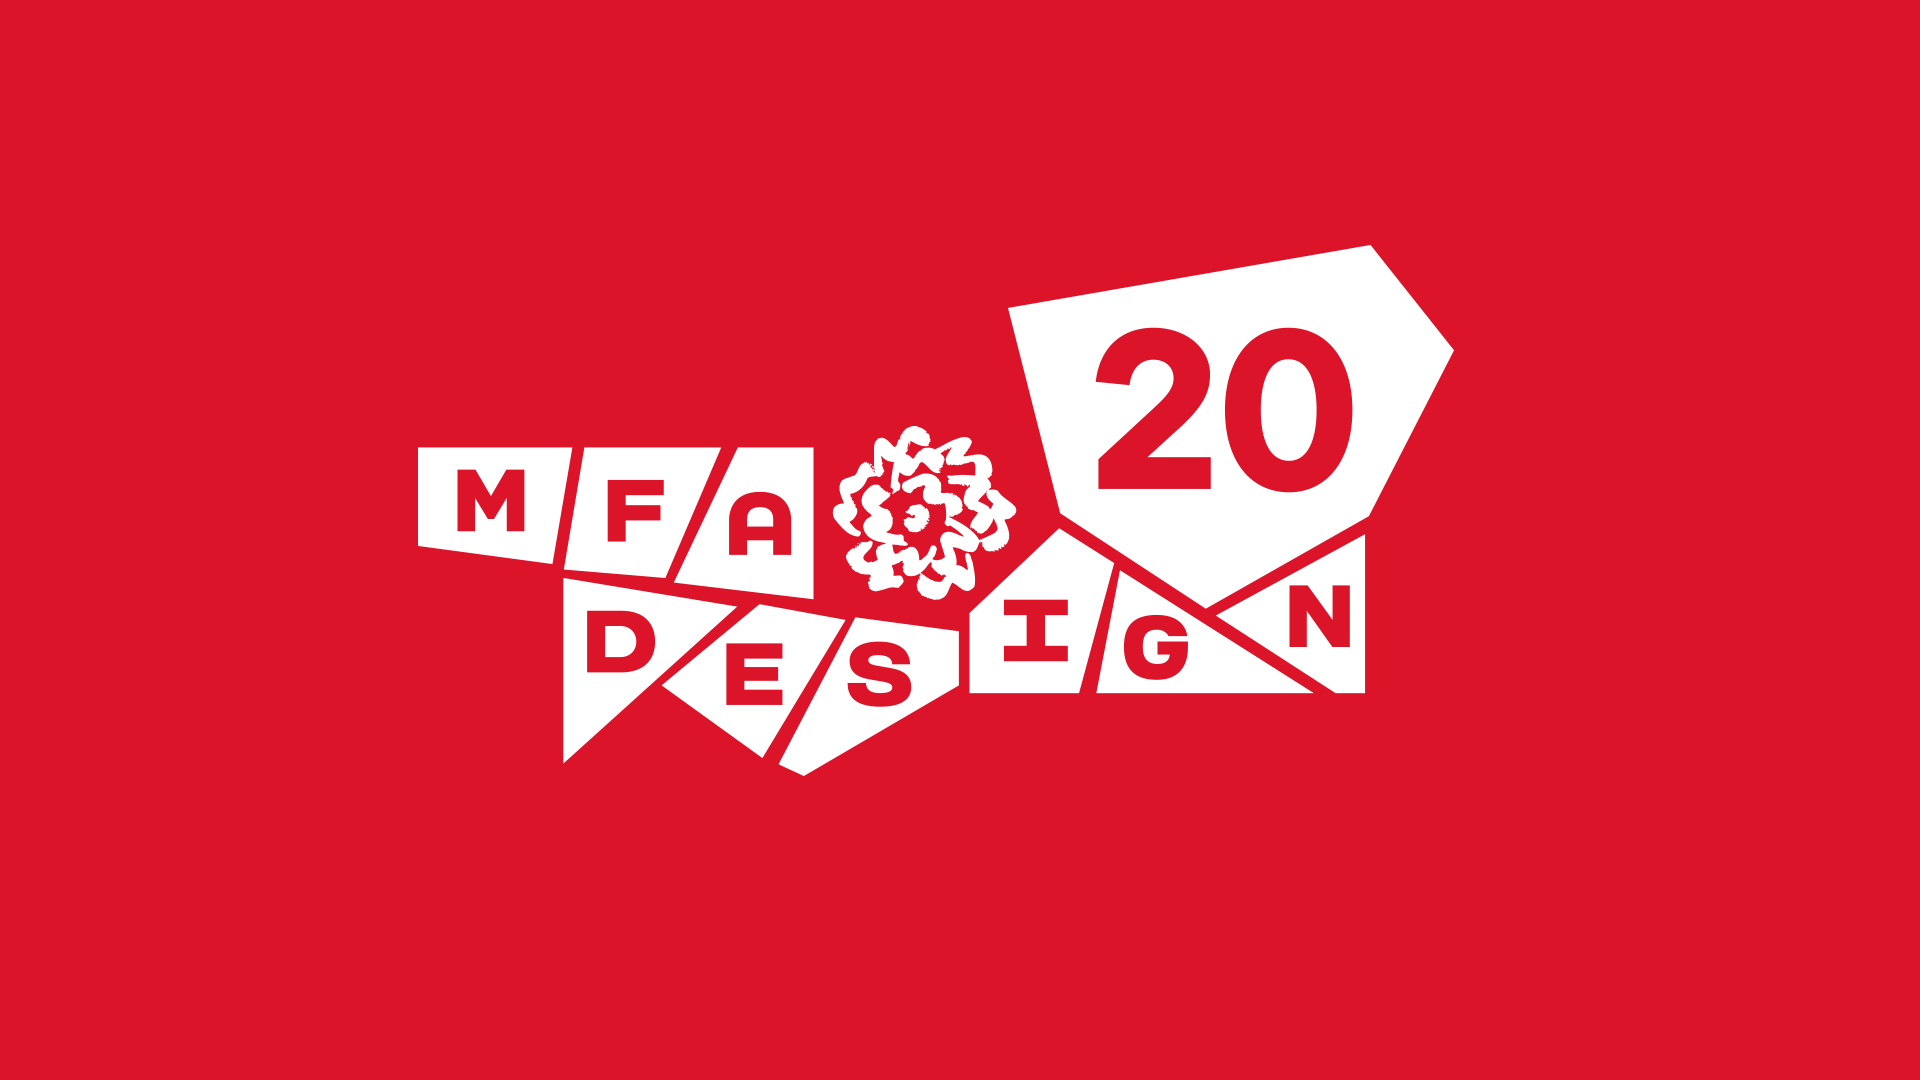 MFA Design logo white on red background